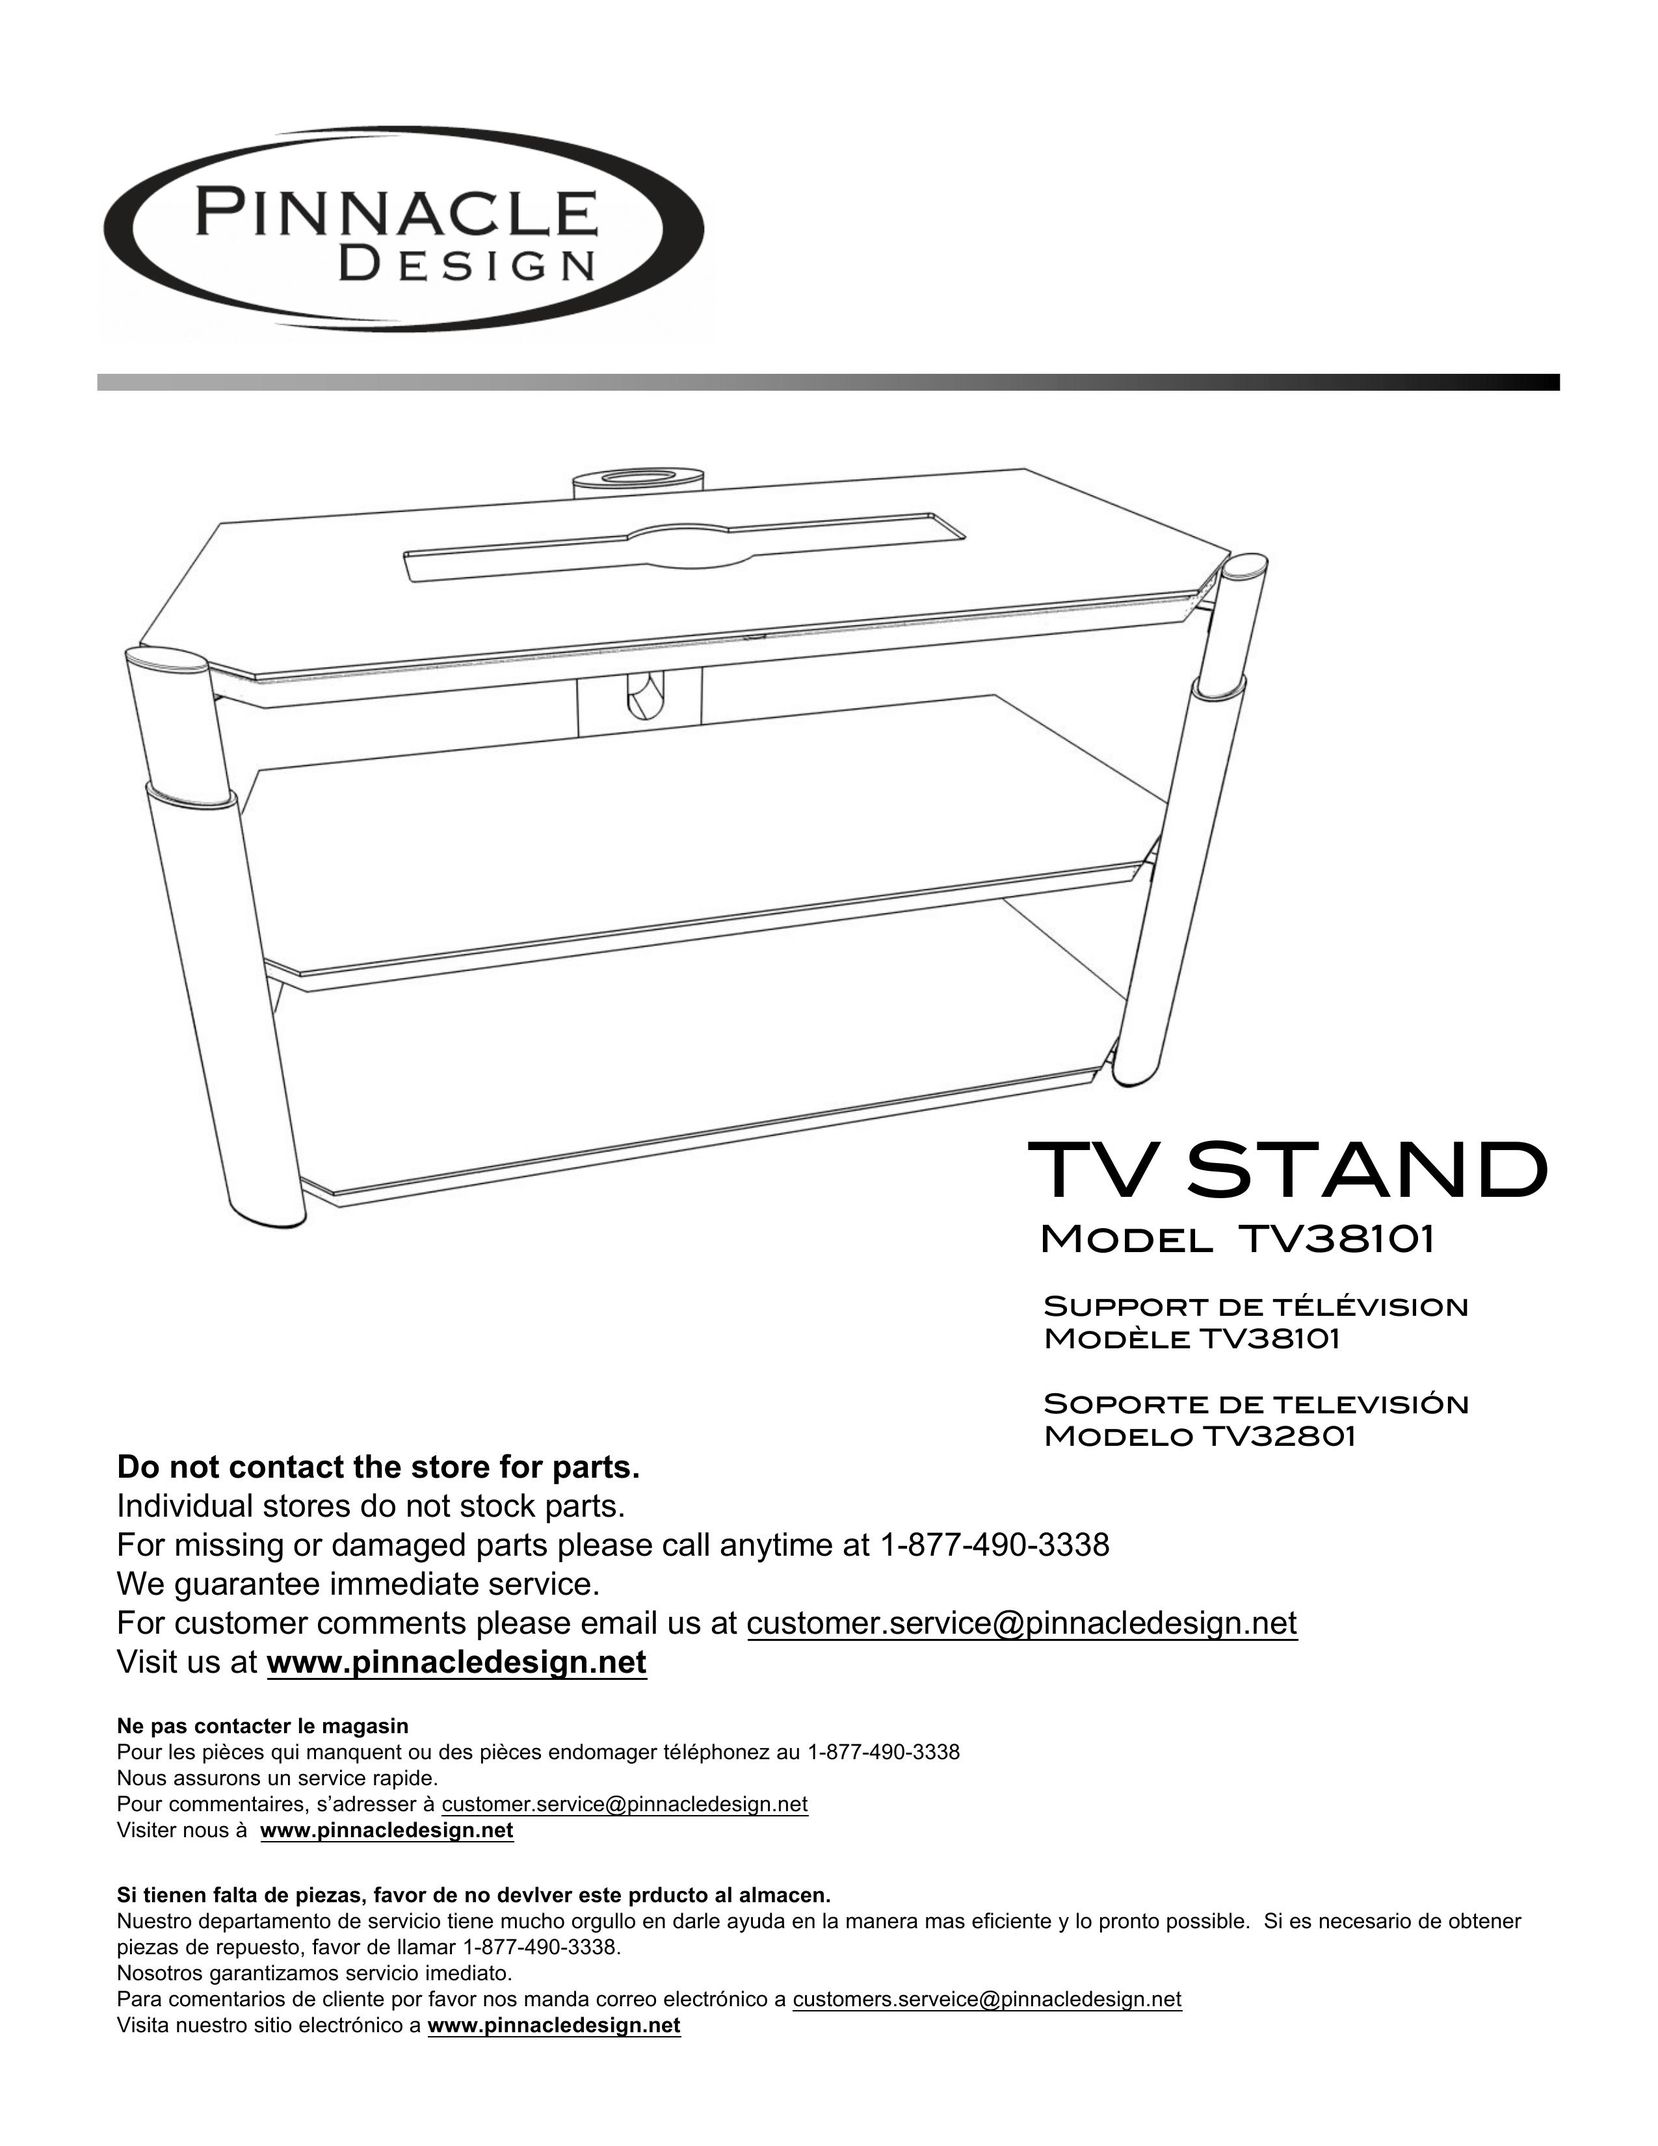 Pinnacle Design TV38101 TV Video Accessories User Manual